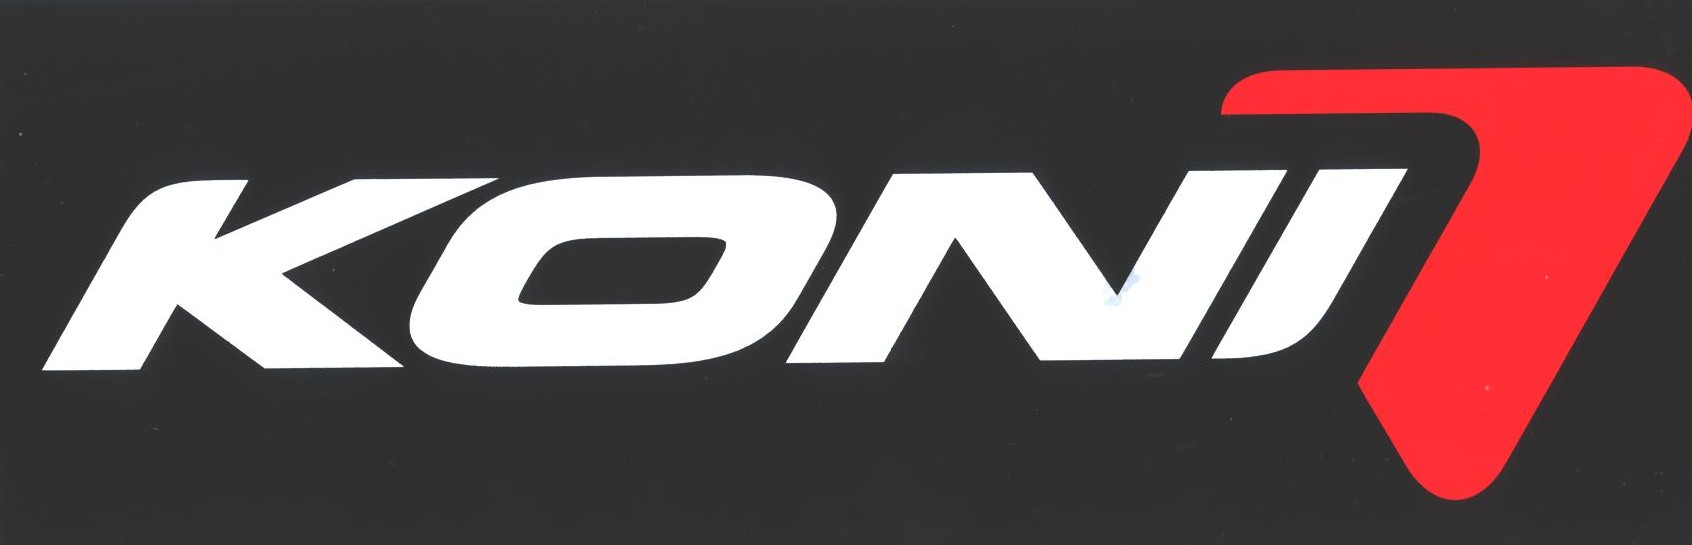 Koni new logo.jpg